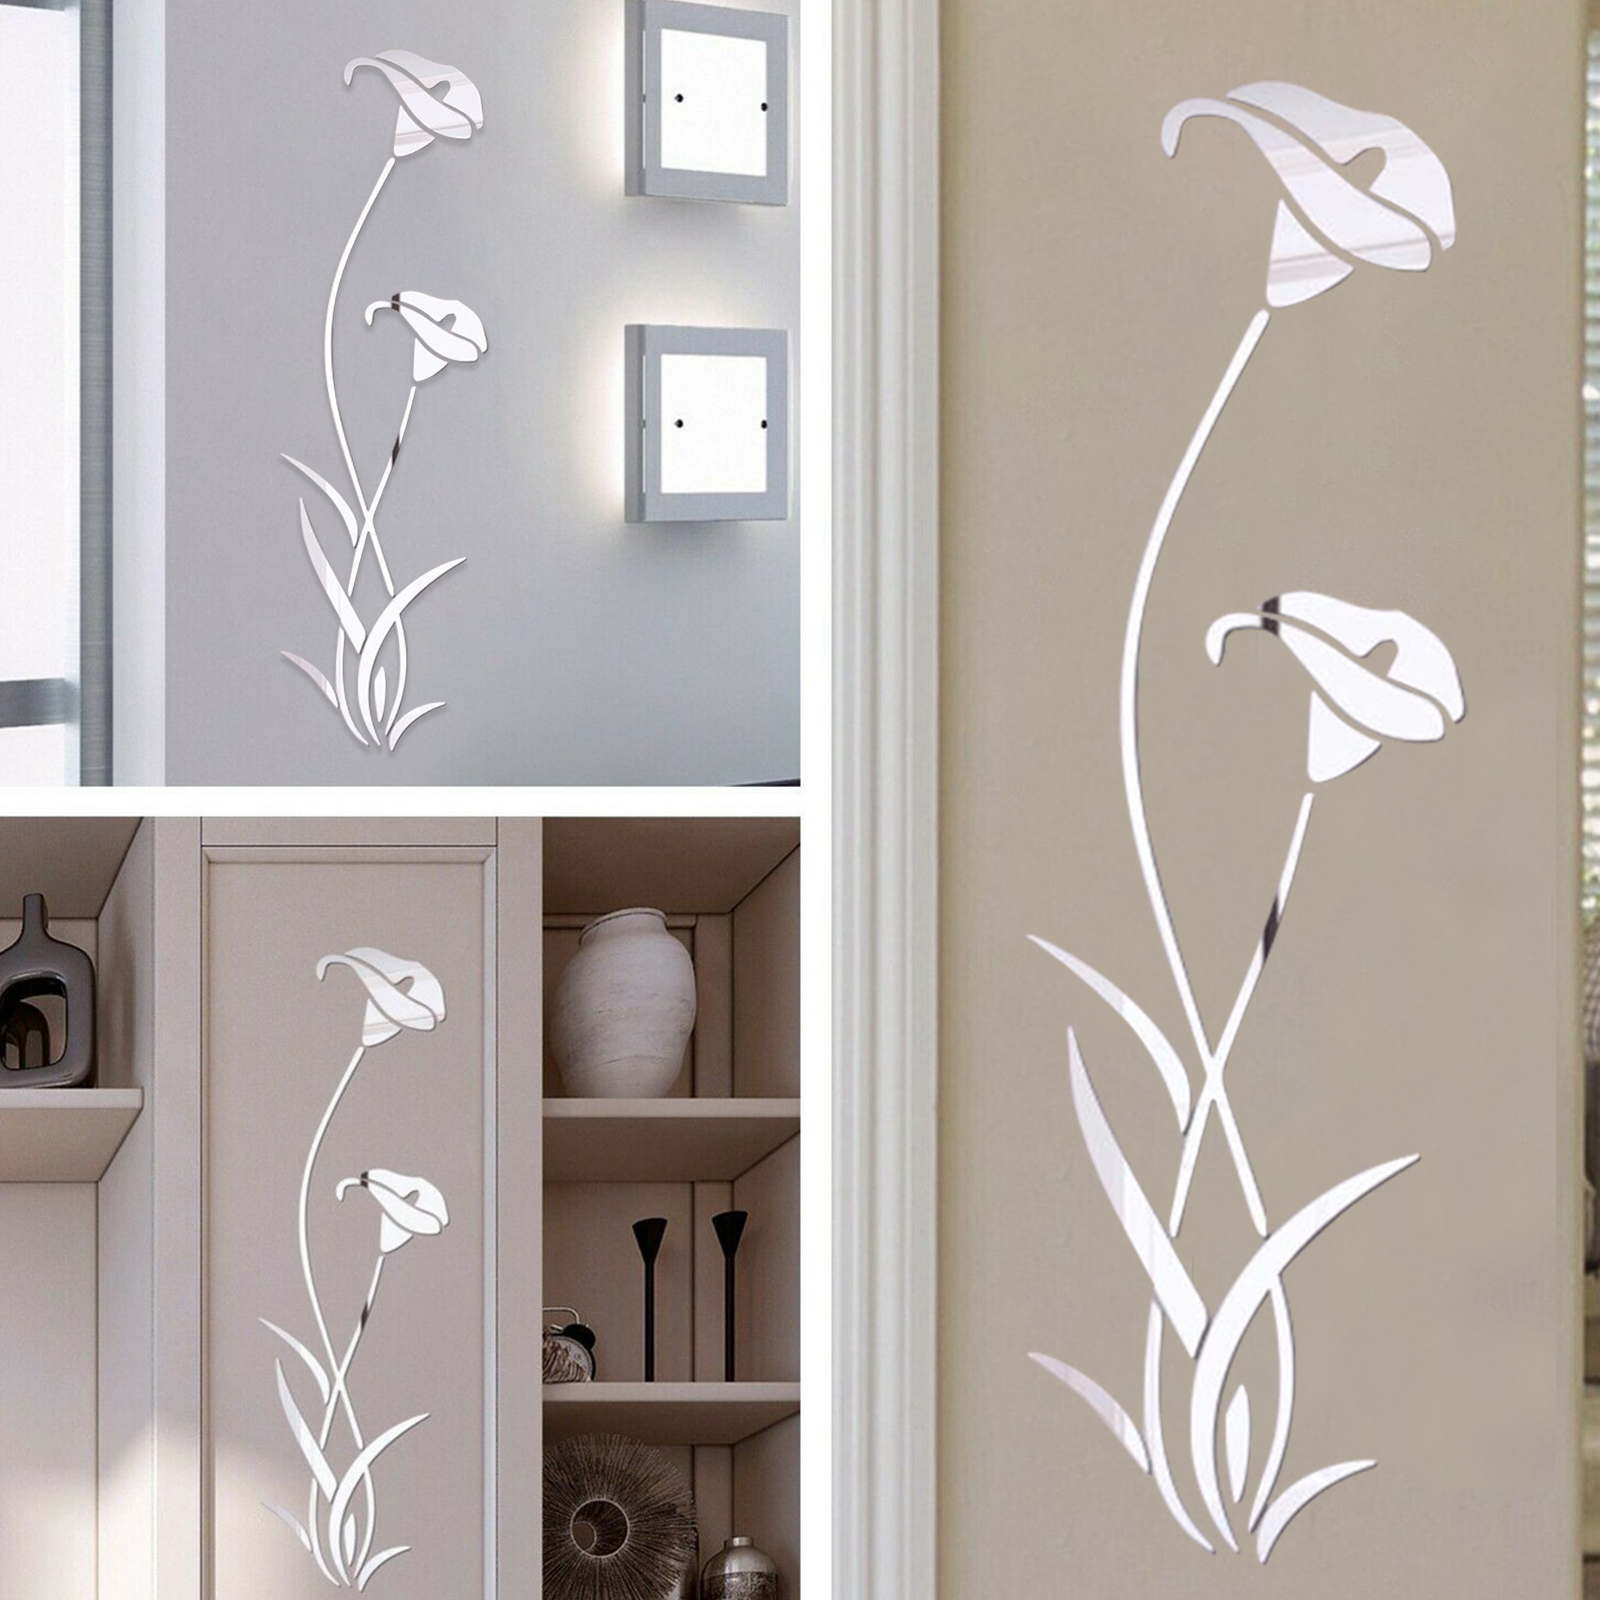 10 x 3D Acrylic Modern Mirror Decal Mural Wall Sticker Home Decor Removable DIY